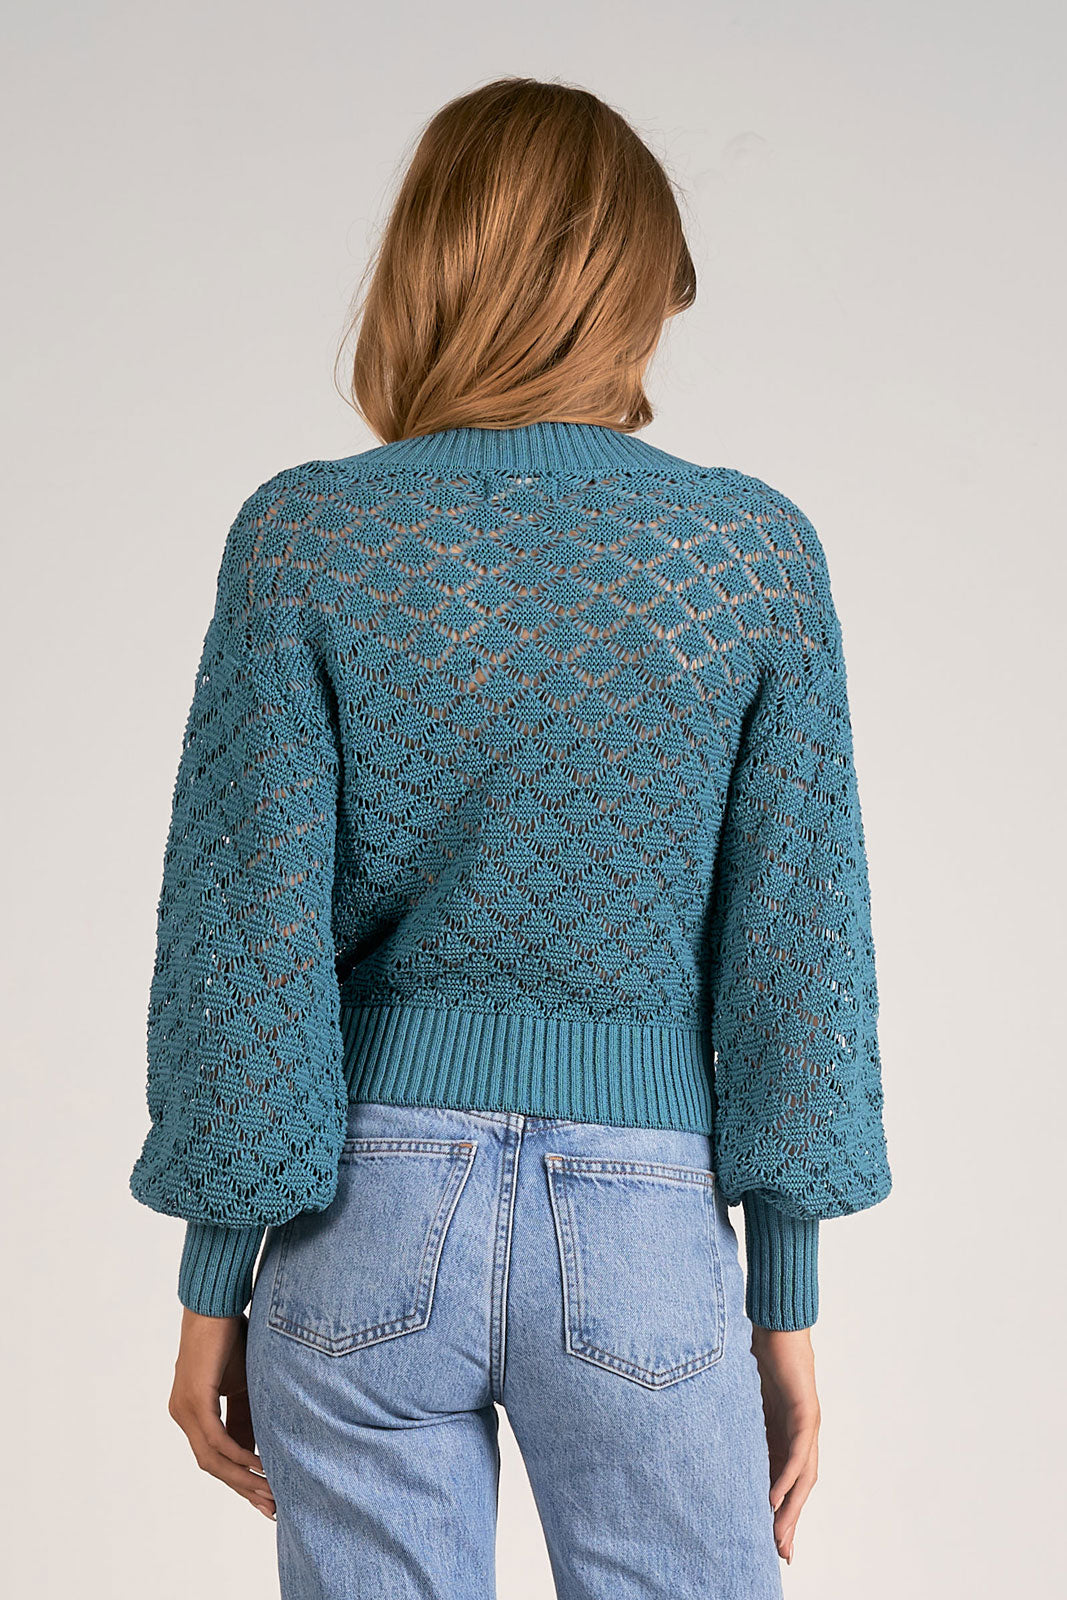 Open Knit Sweater- Peacock